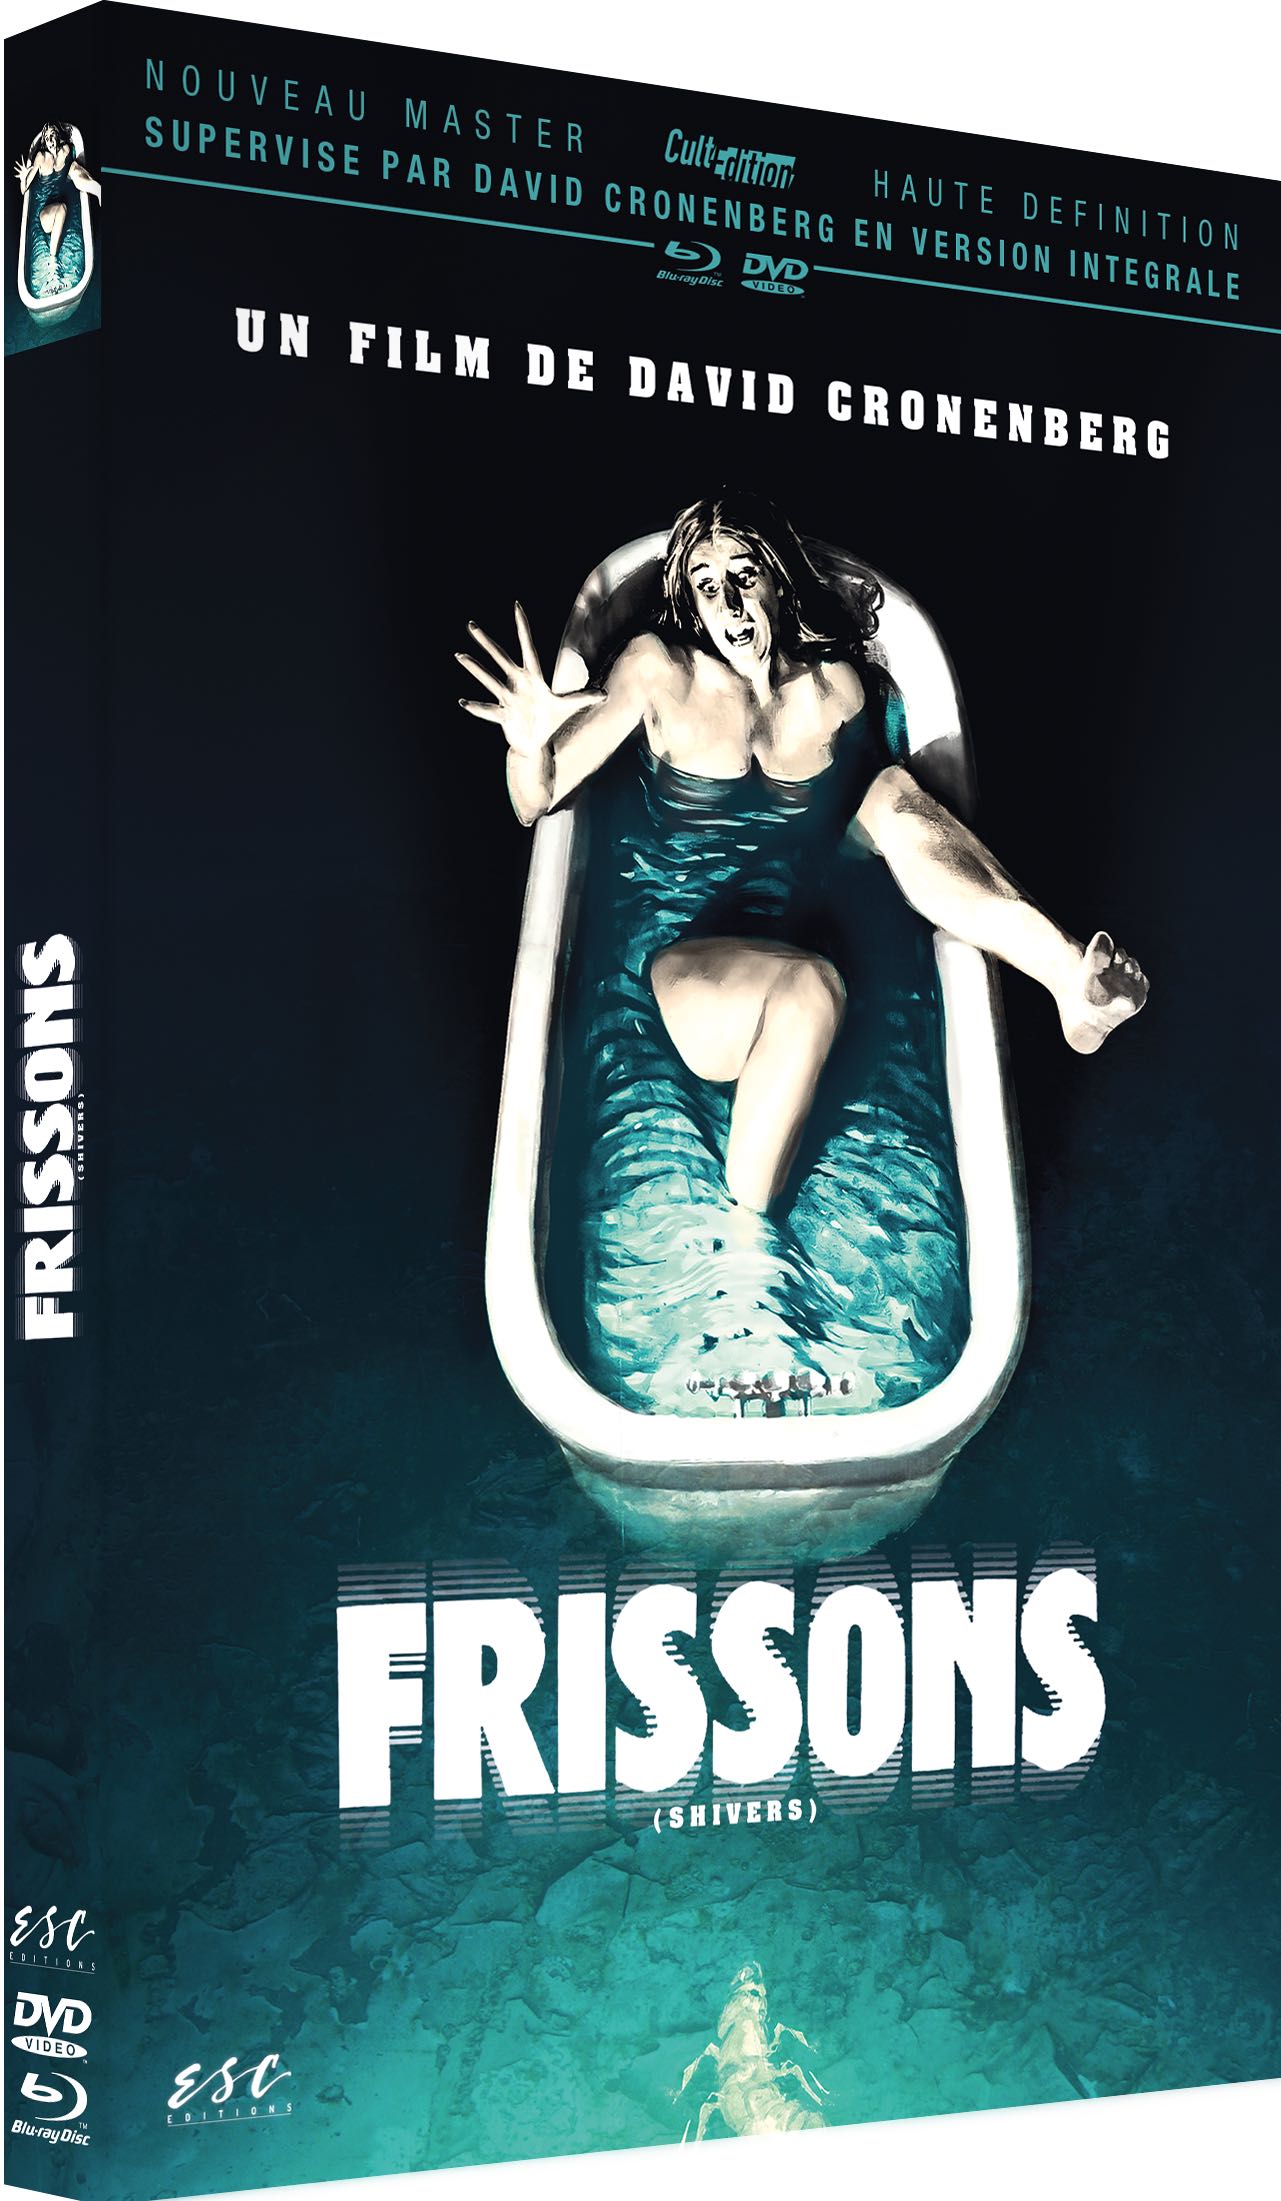 Frissons - Cult'Edition - Blu-ray + DVD + Livret